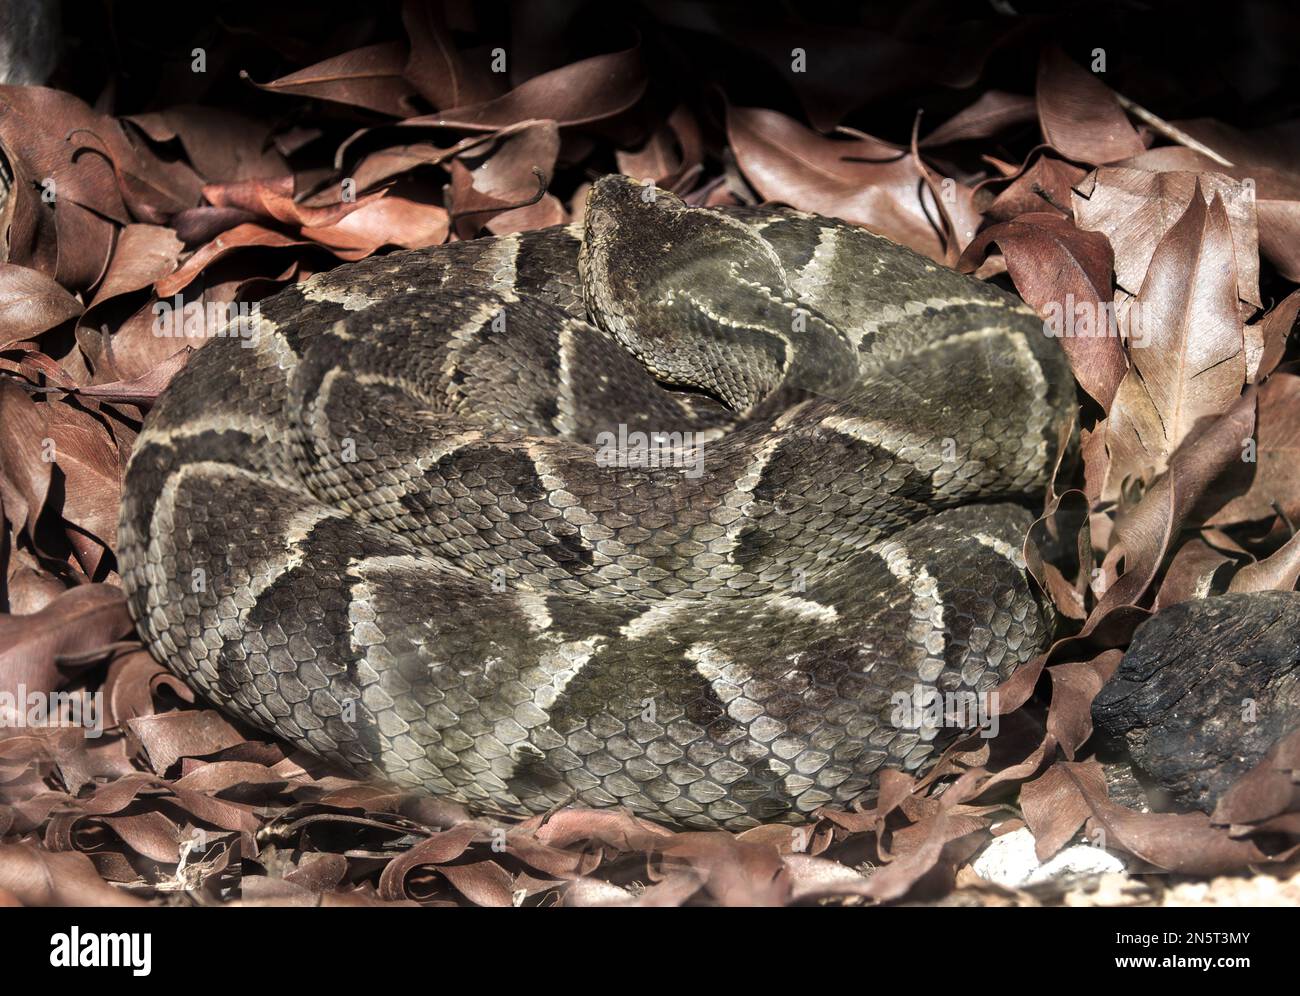 jararaca caiçara, venomous and very dangerous Brazilian snake (Bothrops moojeni) Stock Photo